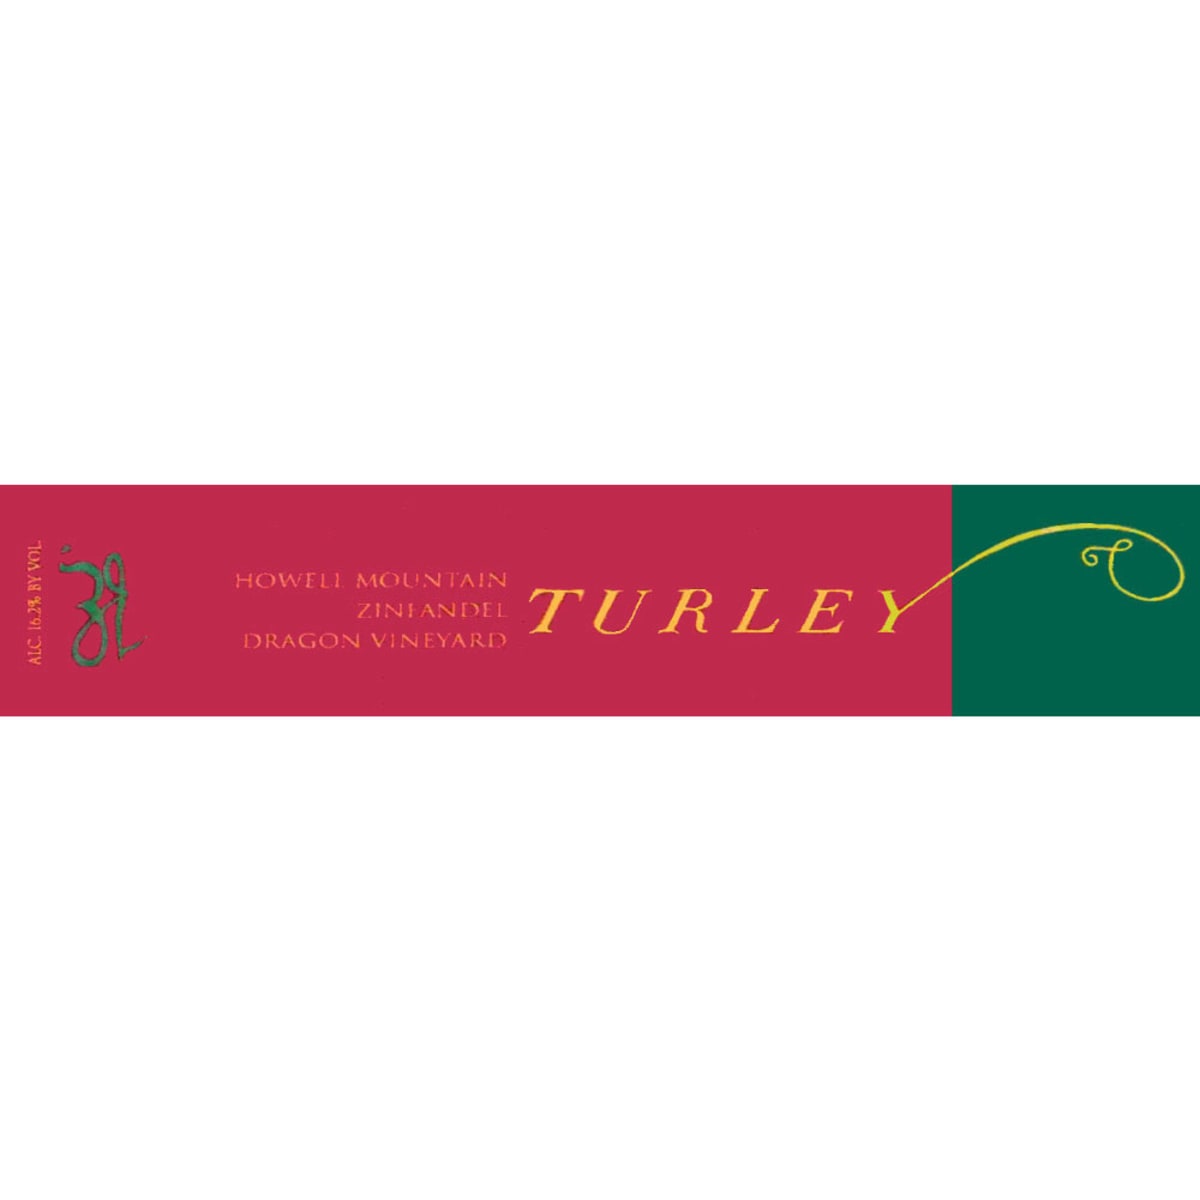 Turley Dragon Zinfandel (torn label) 2005 Front Label